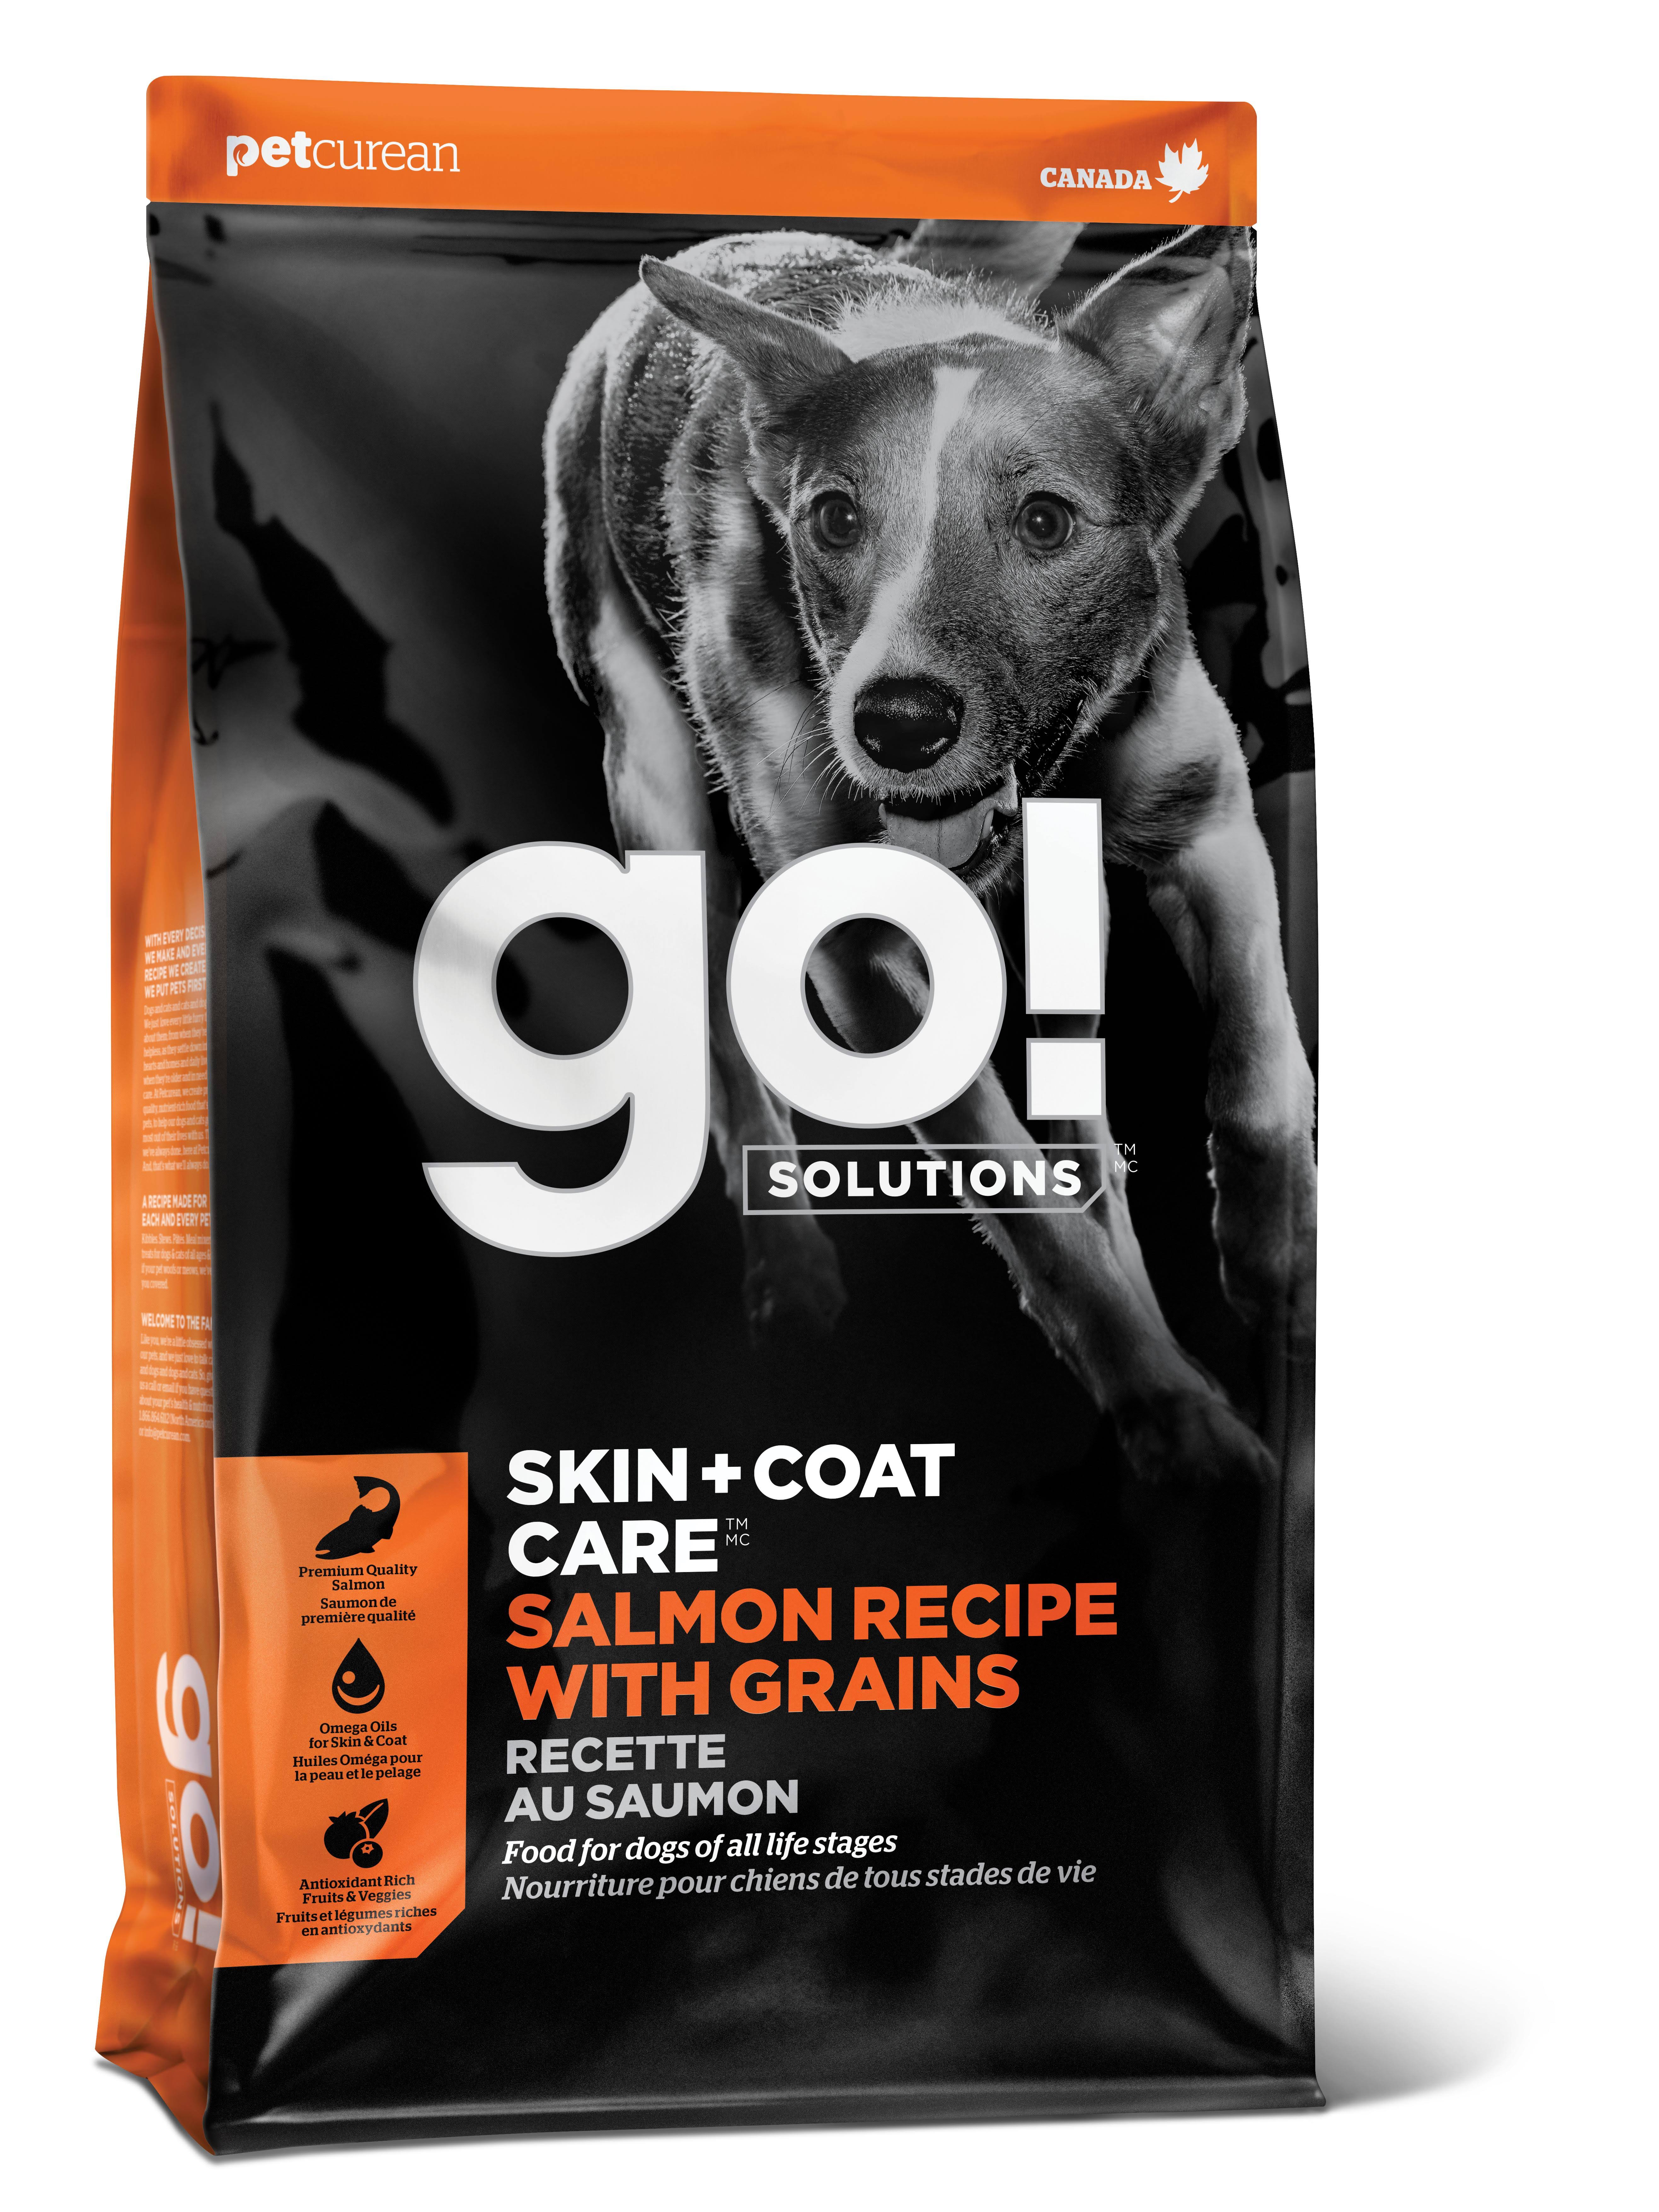 Go! Skin + Coat - Salmon Dog Food, 3.5 LB